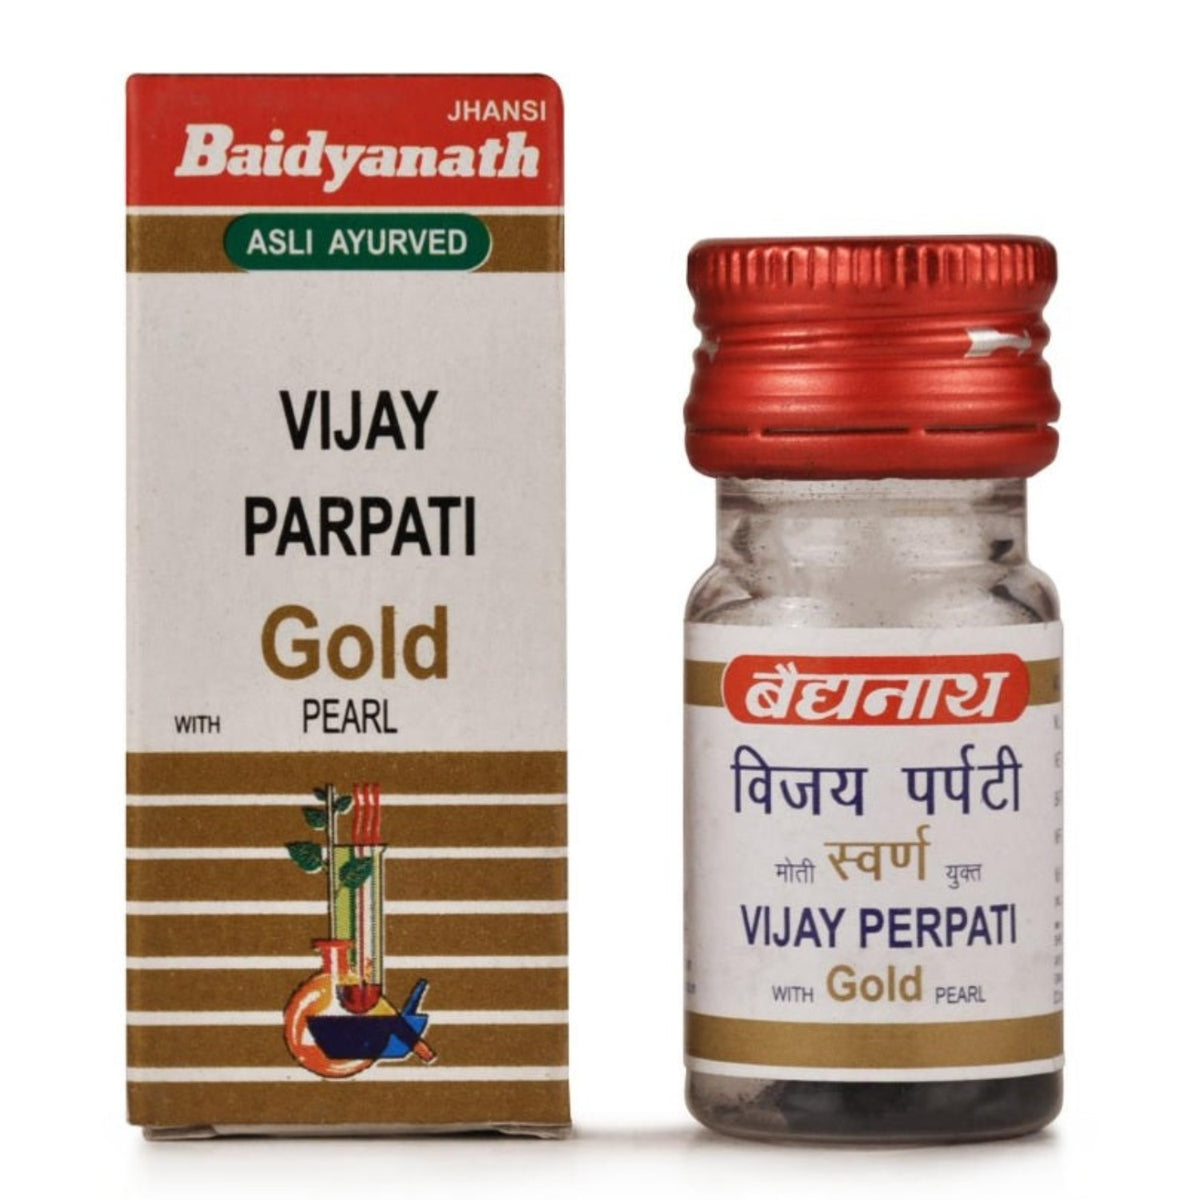 Baidyanath Ayurvedic (Jhansi) Vijay Parpati Gold with Pearl Powder 1gm